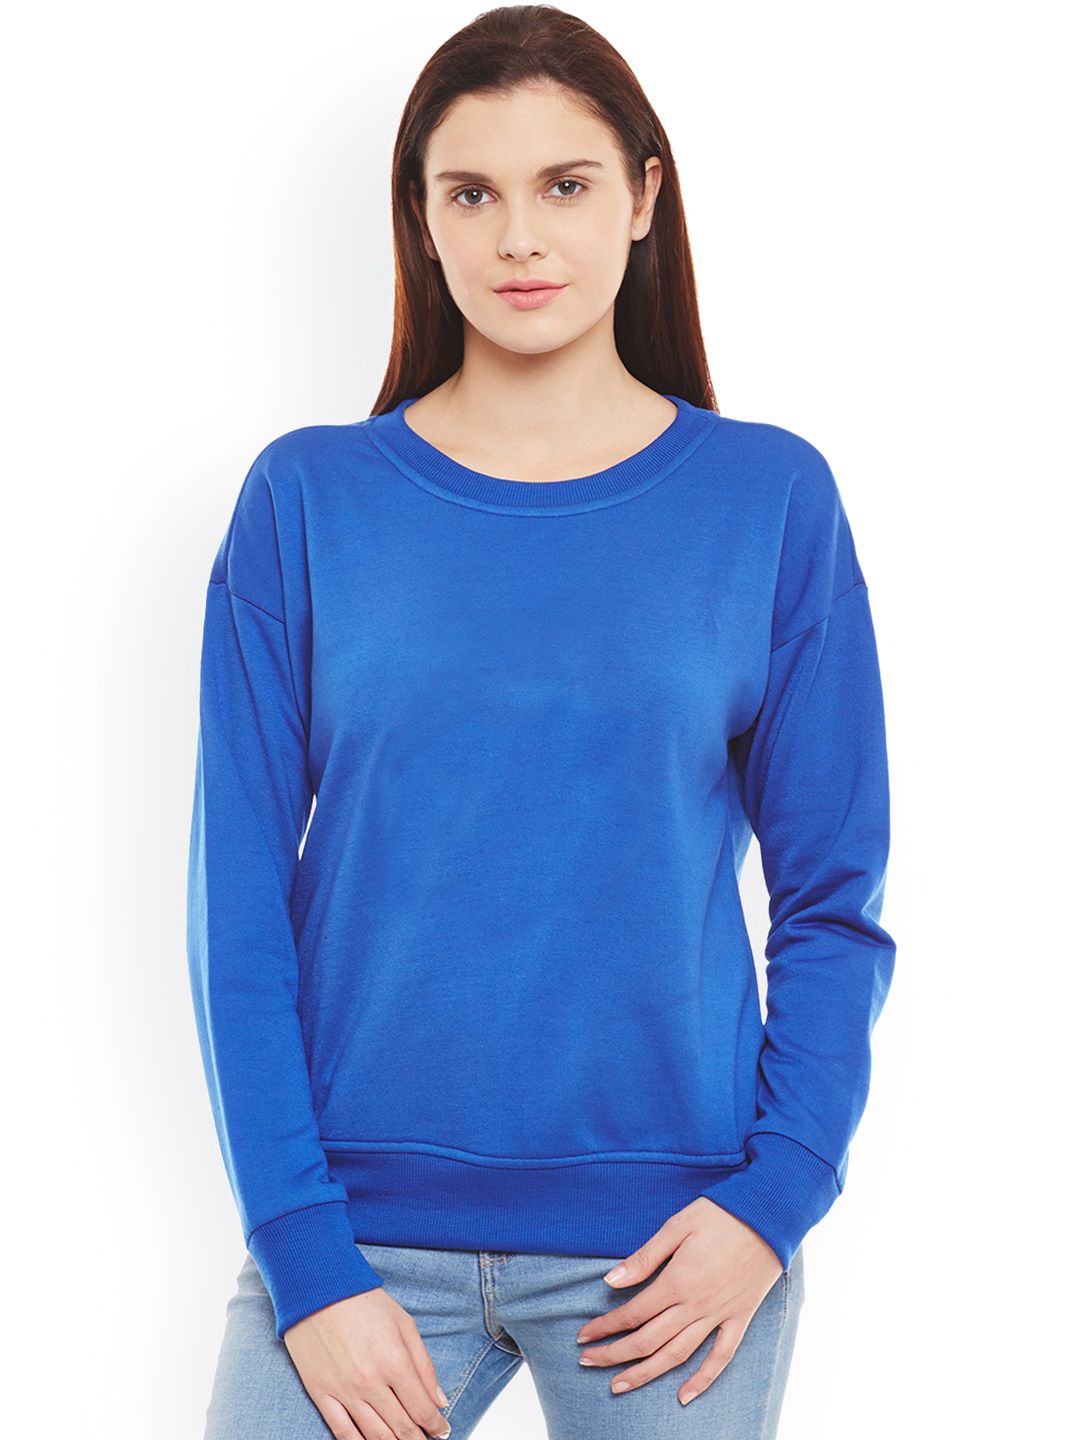 Belle Fille  Blue Sweatshirt Price in India